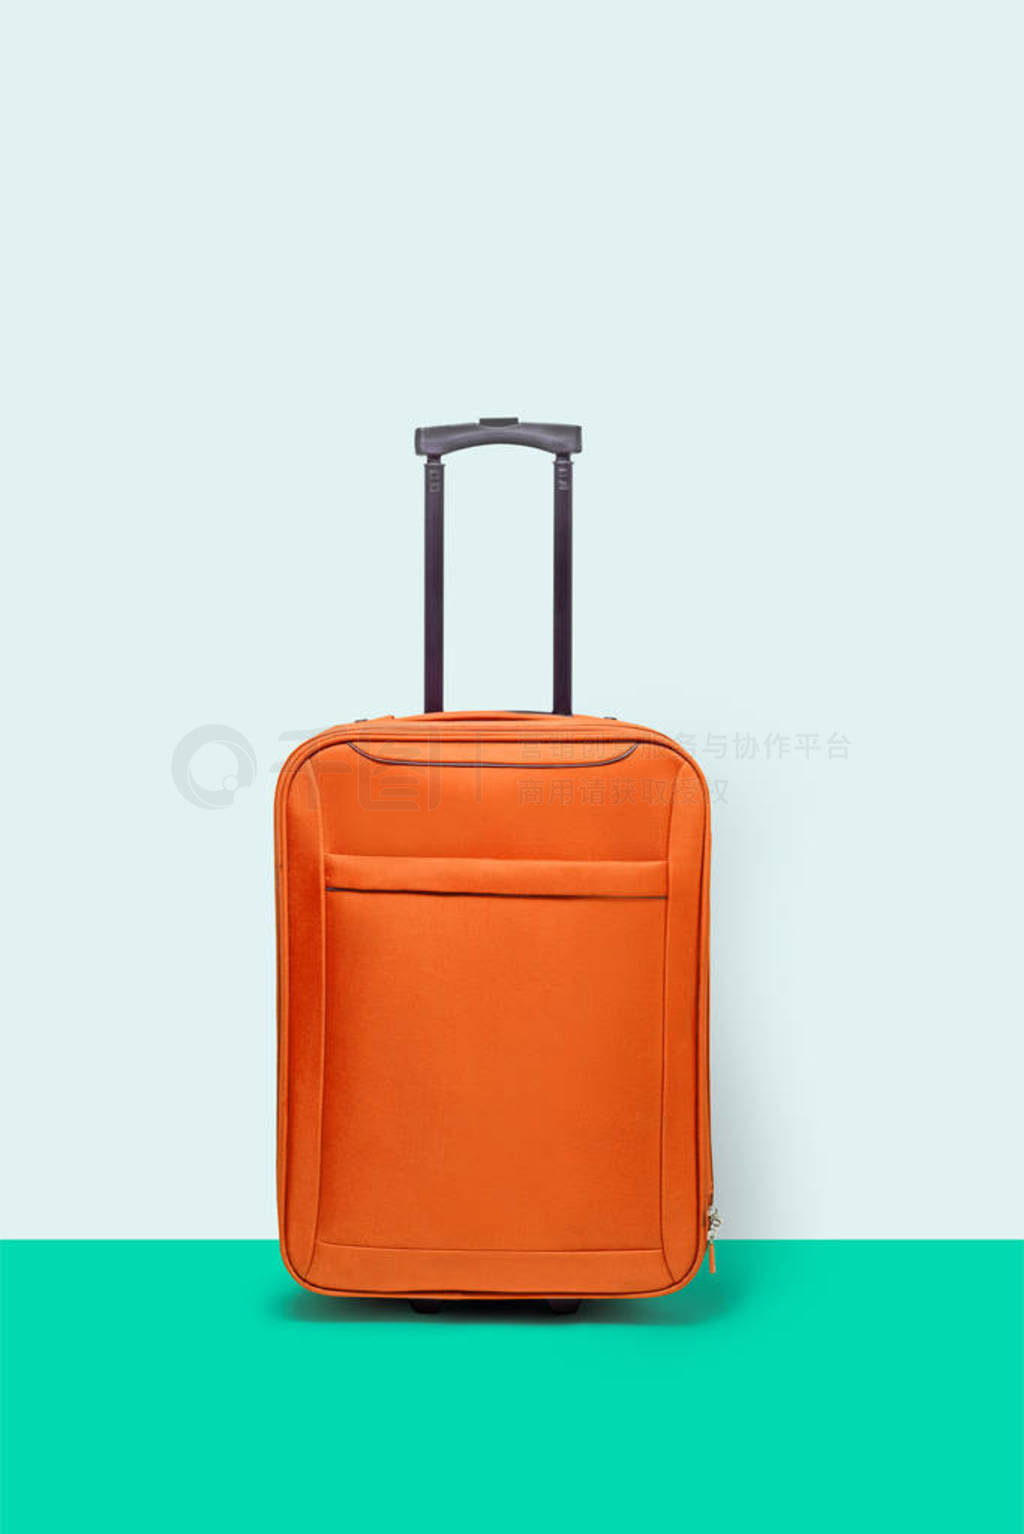 Orange suitcase standing in turquoise floor. Concept of tourism